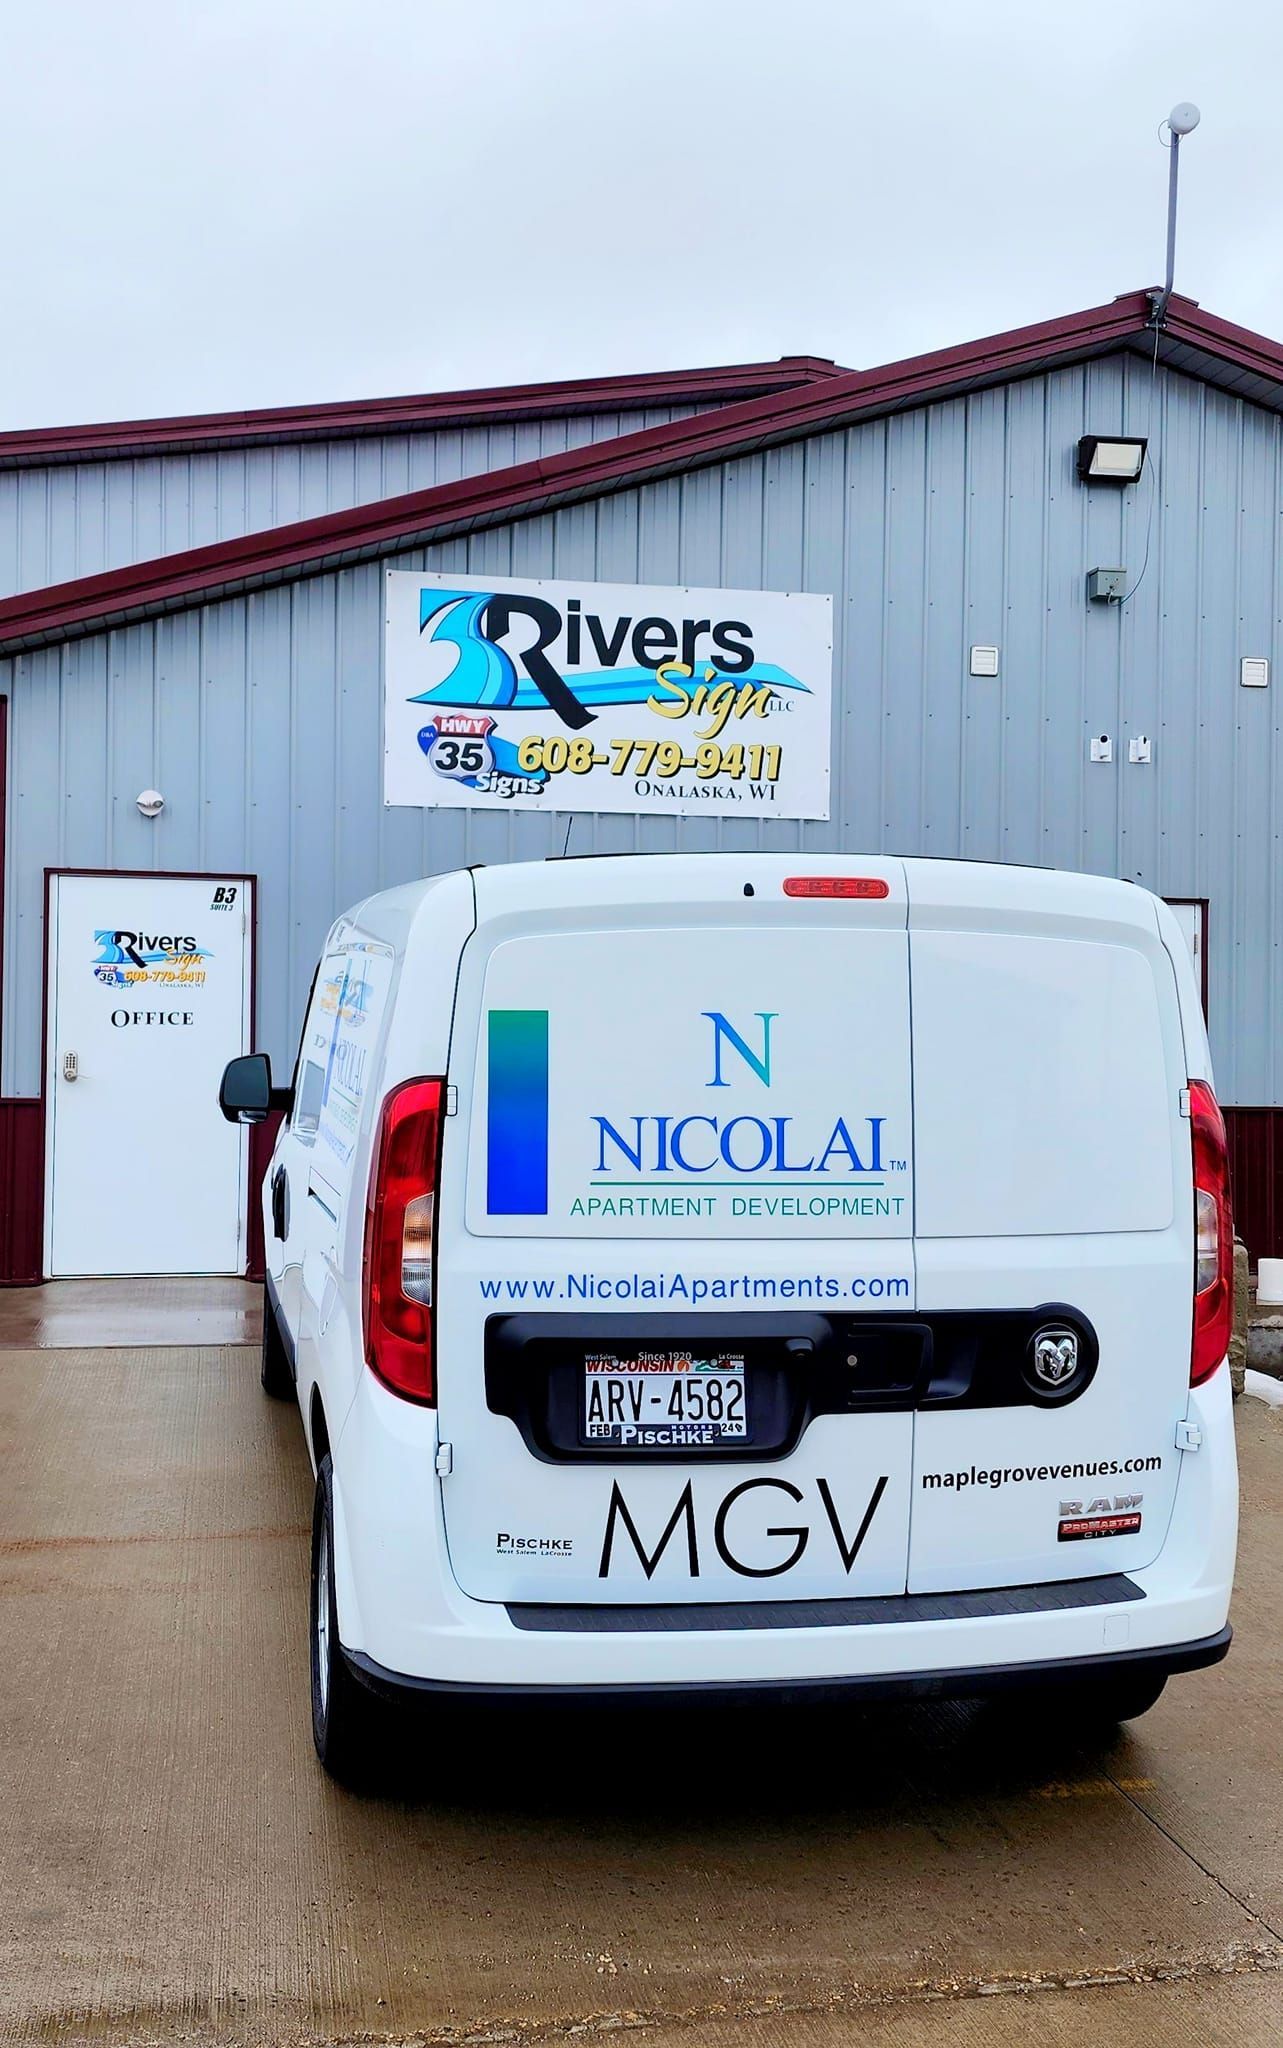 Nicolai Vinyl Graphics — Onalaska, WI — 3 Rivers Sign LLC - DBA Highway 35 Signs